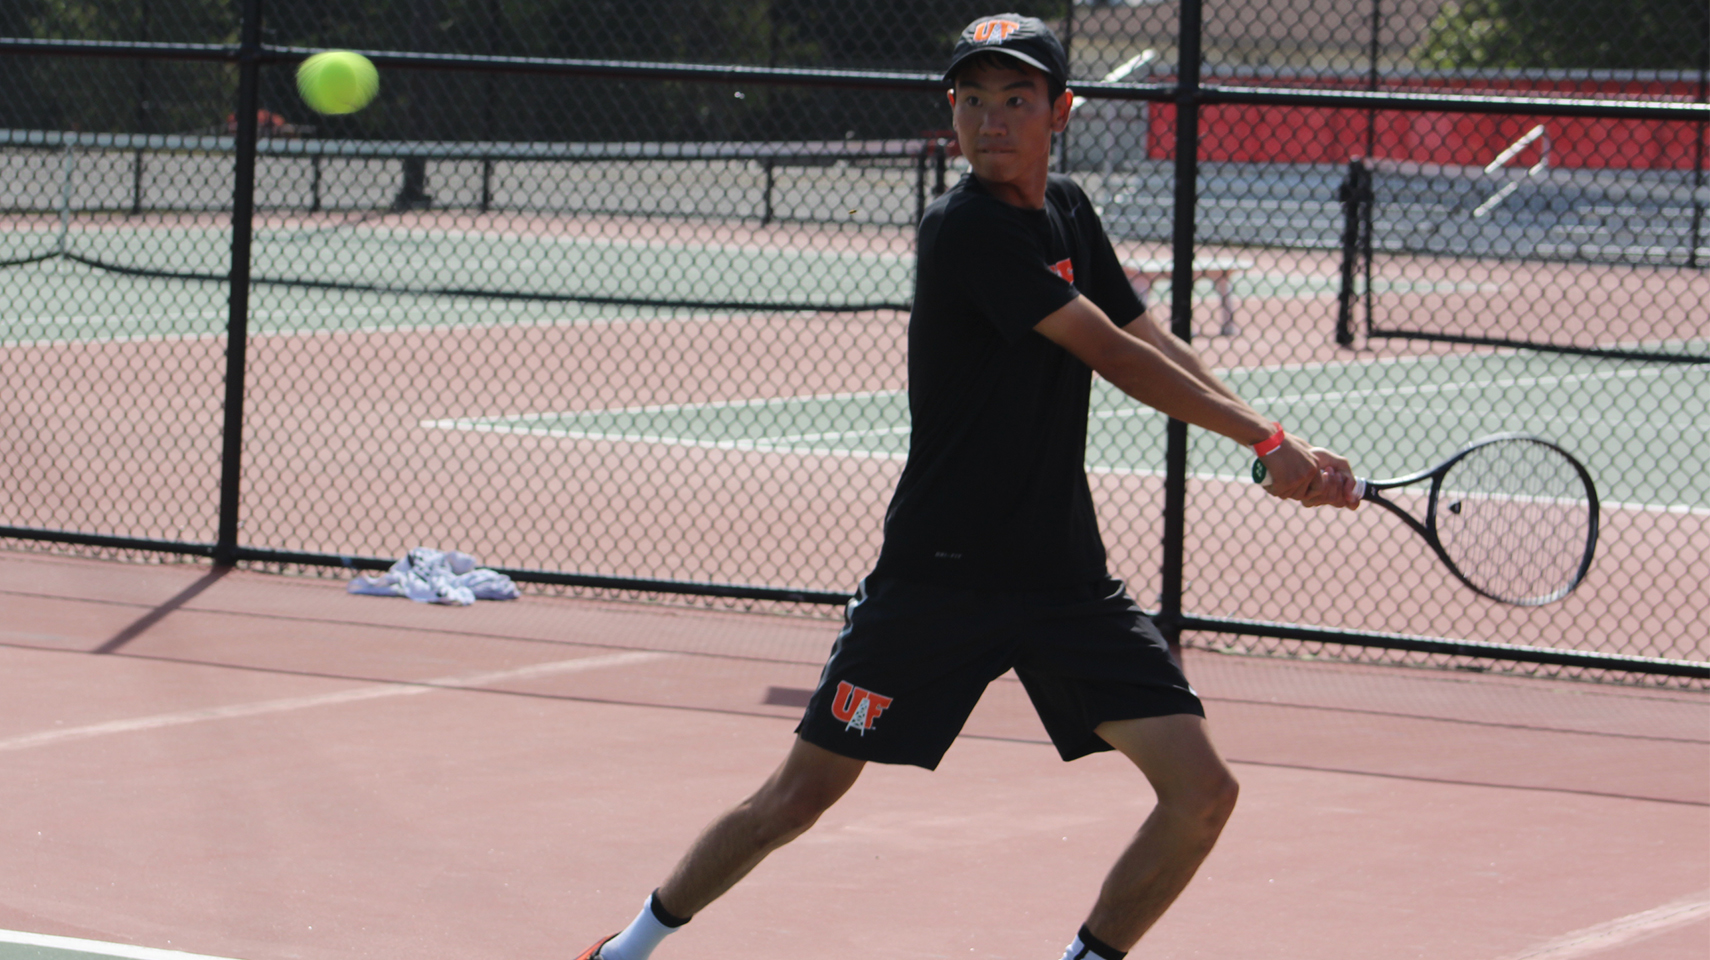 Men's tennis player in black returning serve.